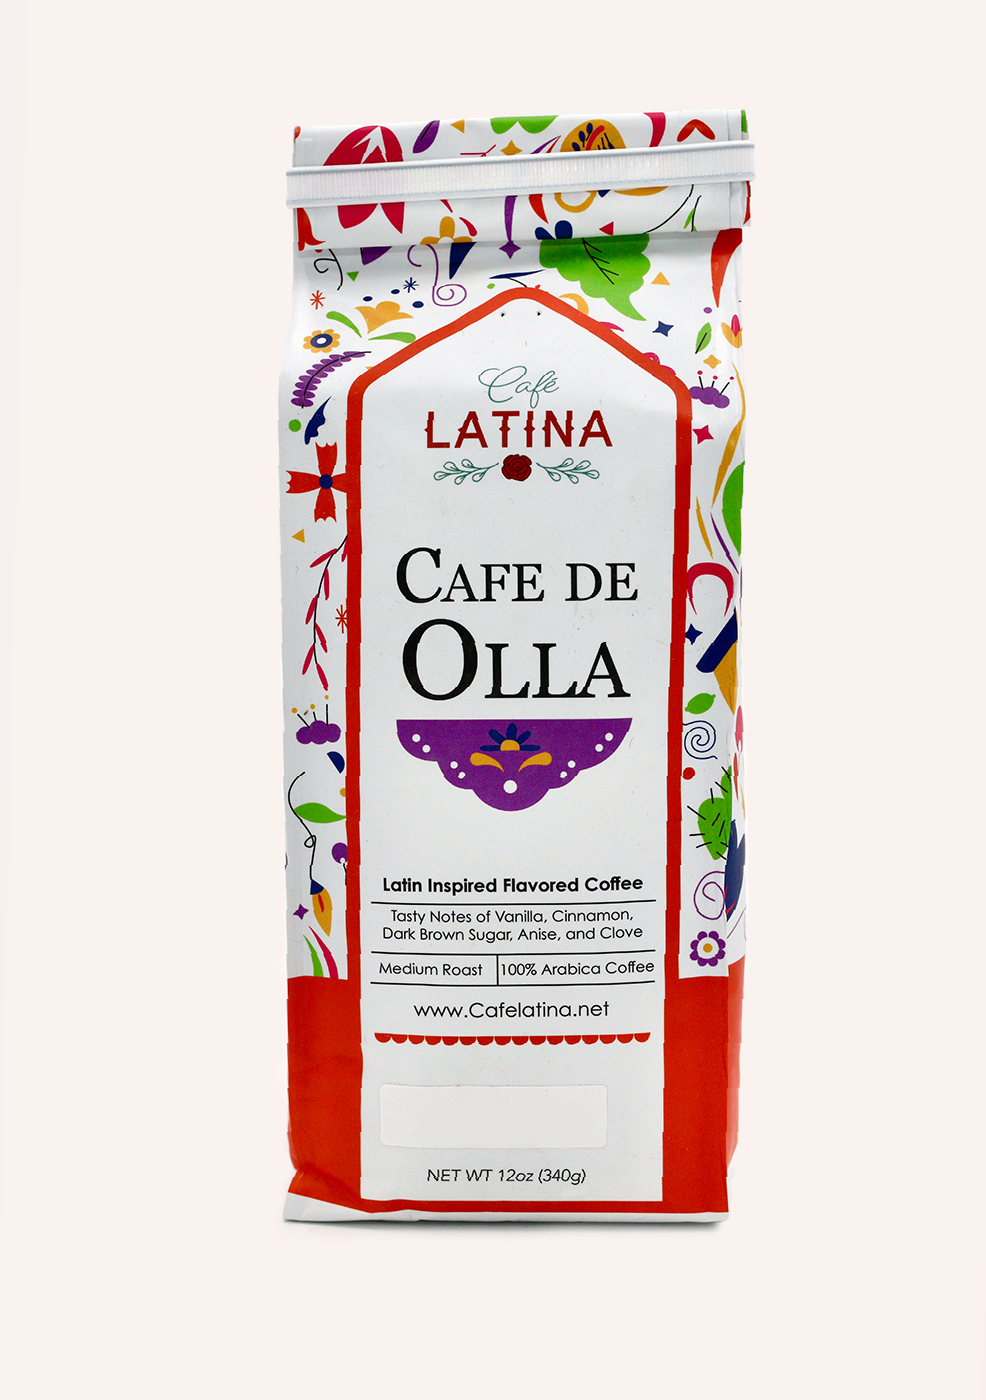 https://cafelatina.net/wp-content/uploads/2020/05/cafeolla-front-1.jpg